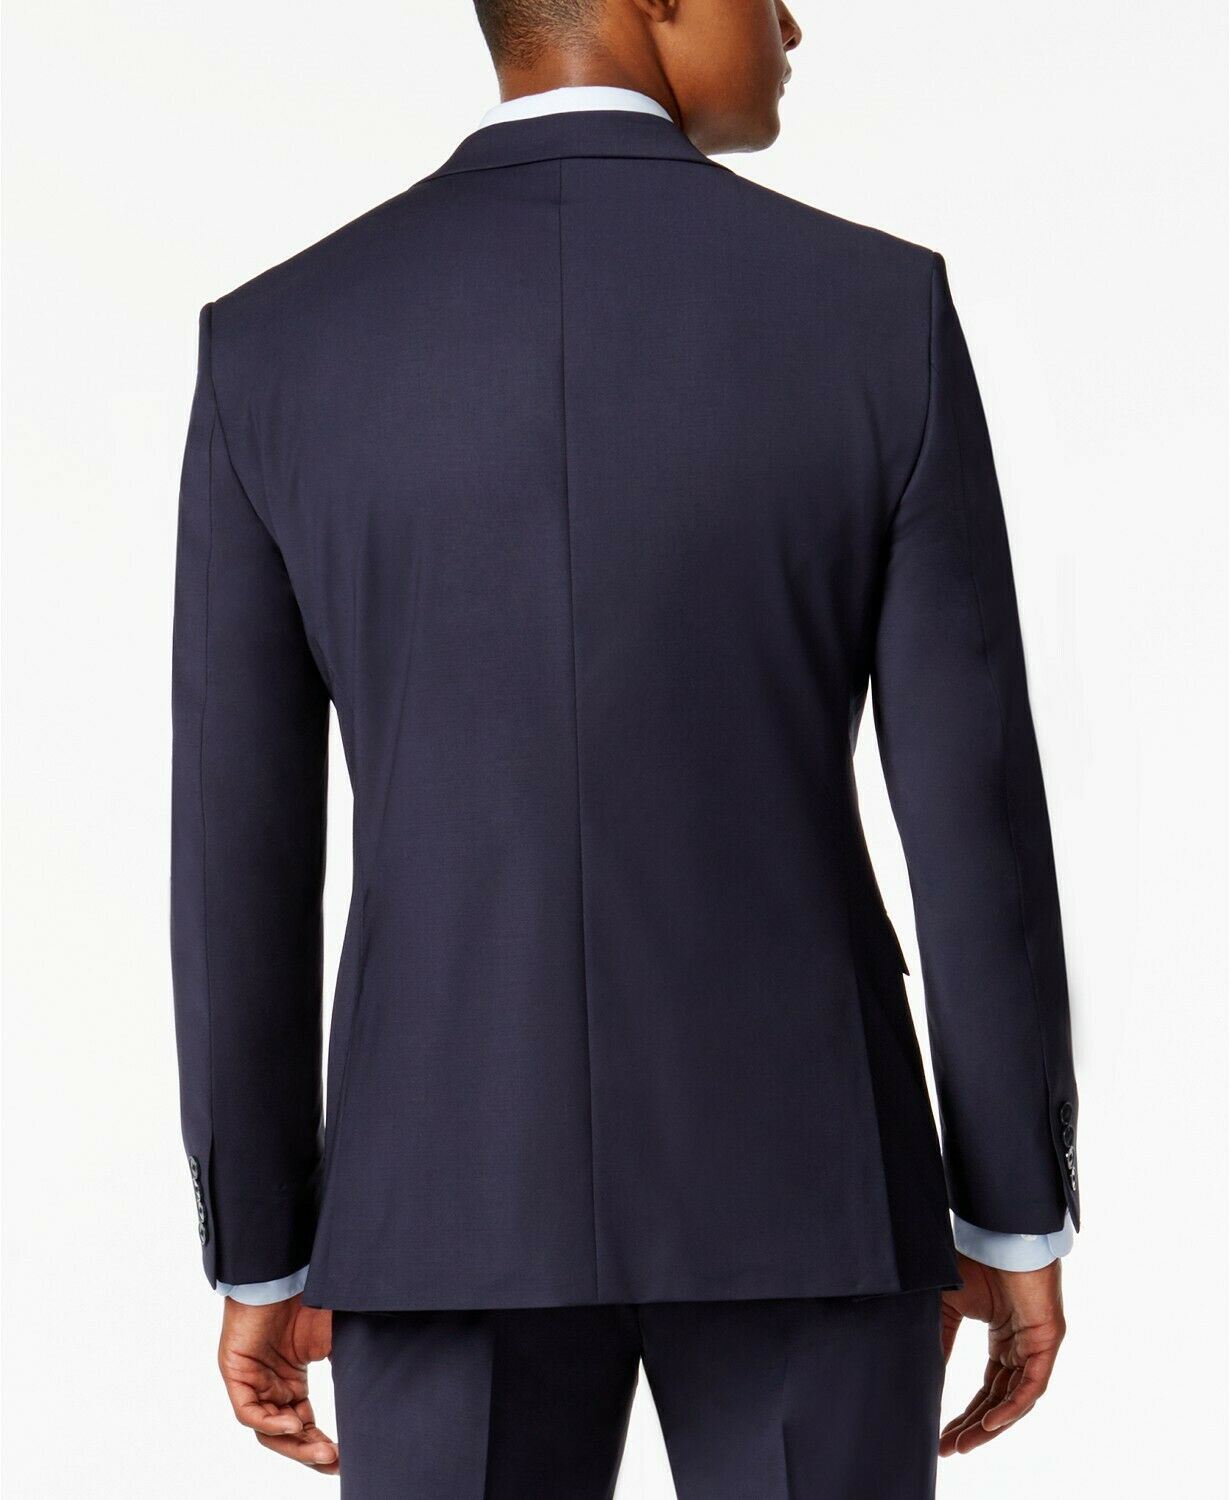 Calvin Klein Mens Jacket Sport Coat 46R Navy Blue Infinite Stretch Slim Fit